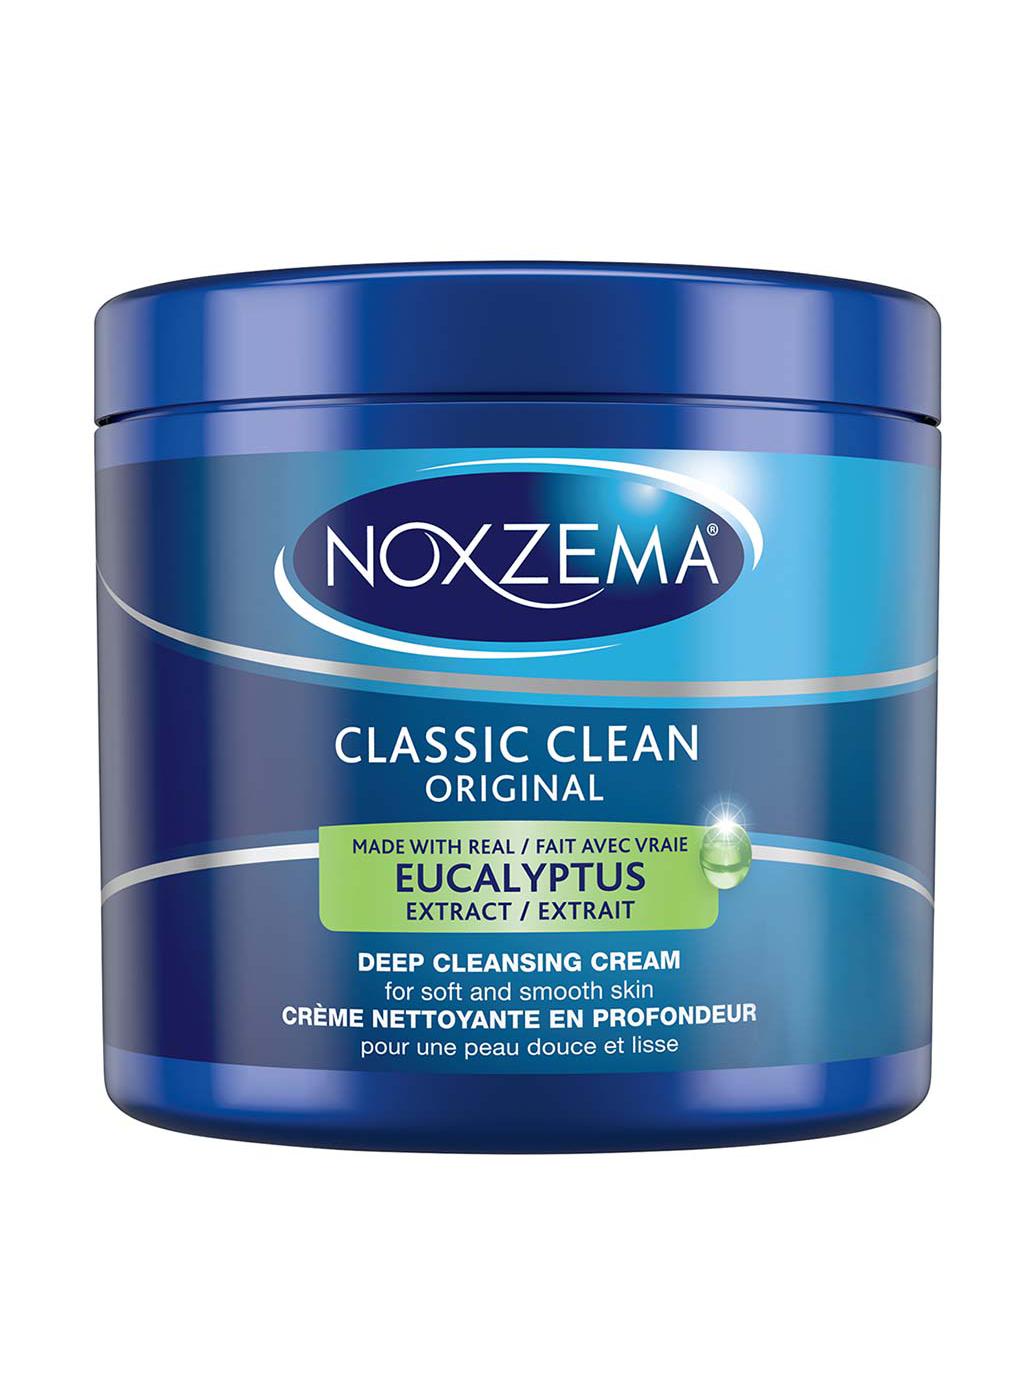 Noxzema Classic Clean Original Deep Cleansing Cream; image 1 of 4